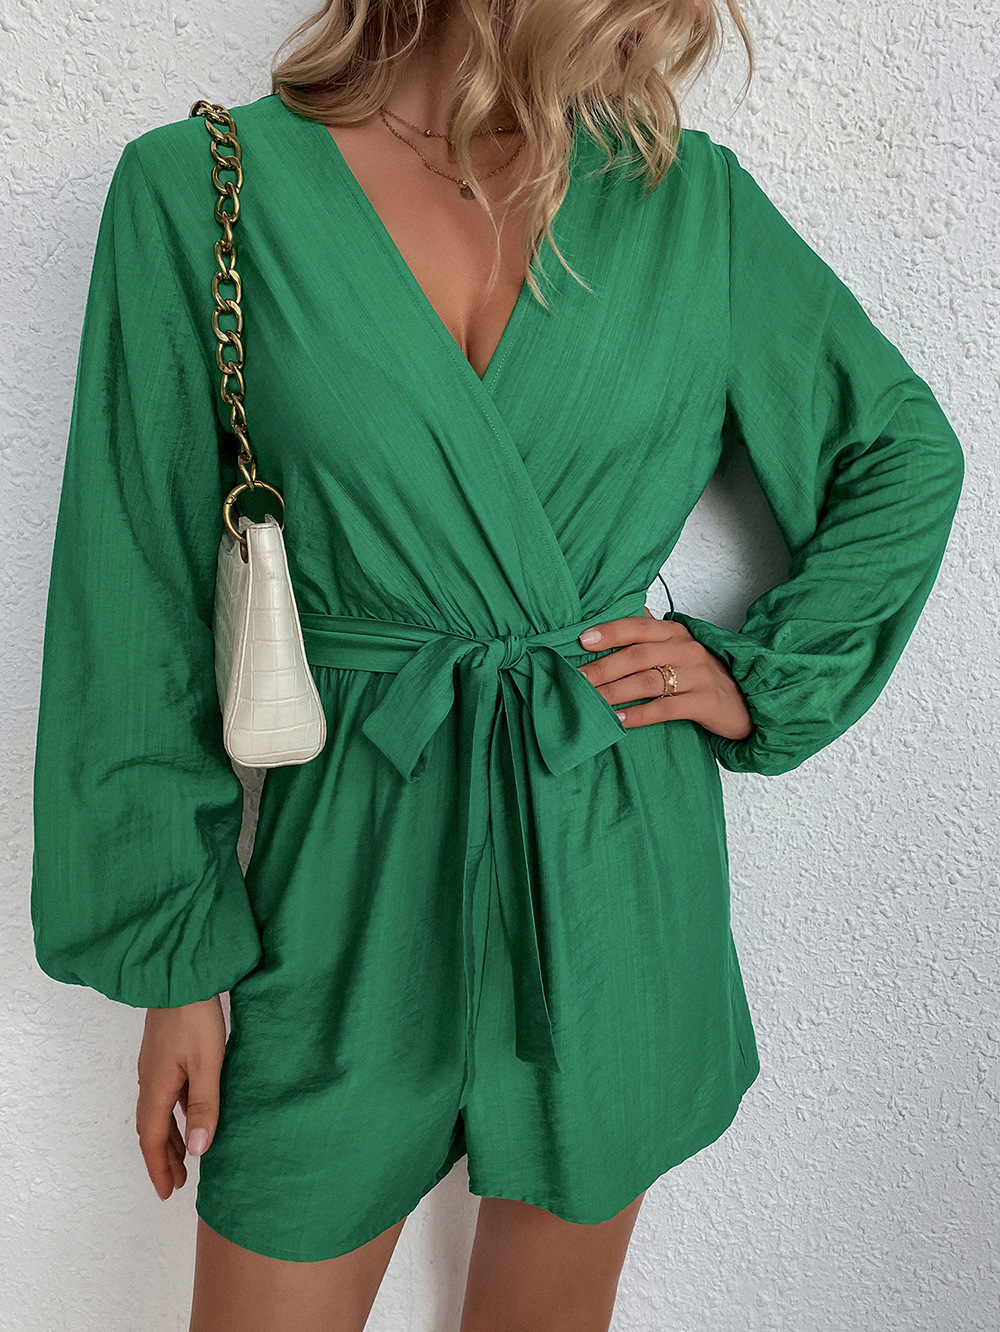 Bow European style green autumn V-neck jumpsuit for women